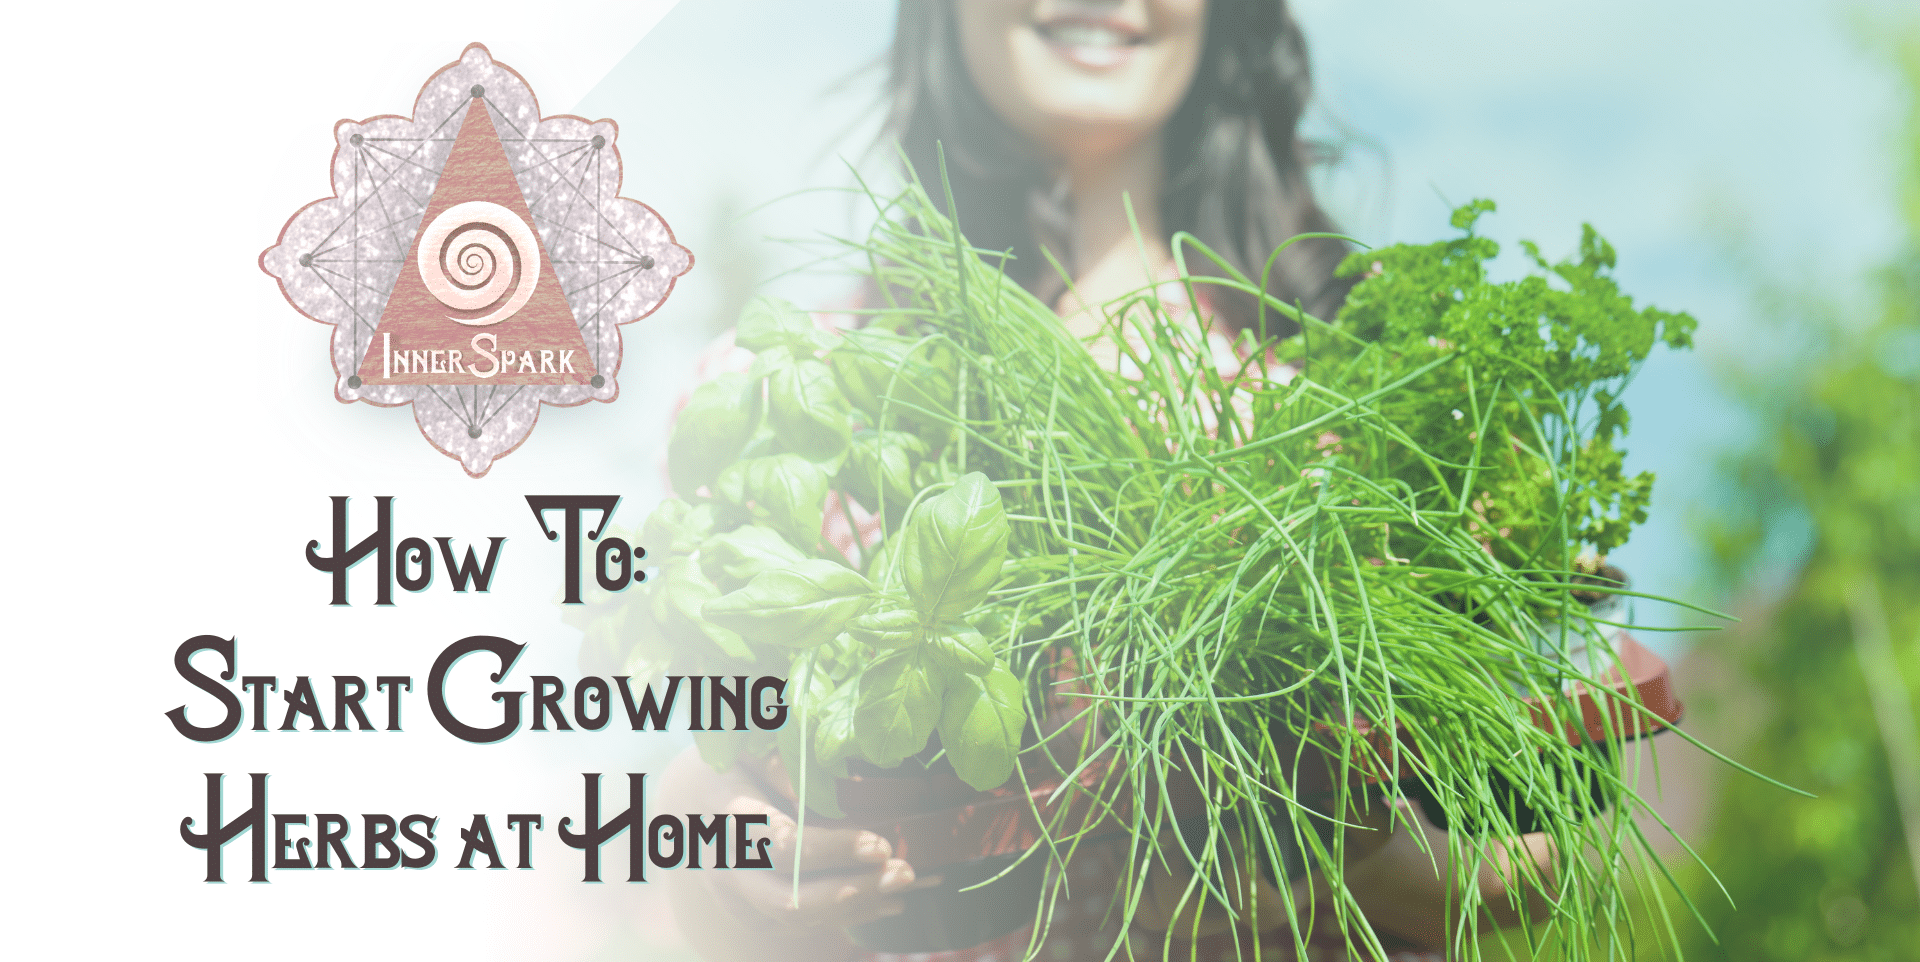 Grow herbs